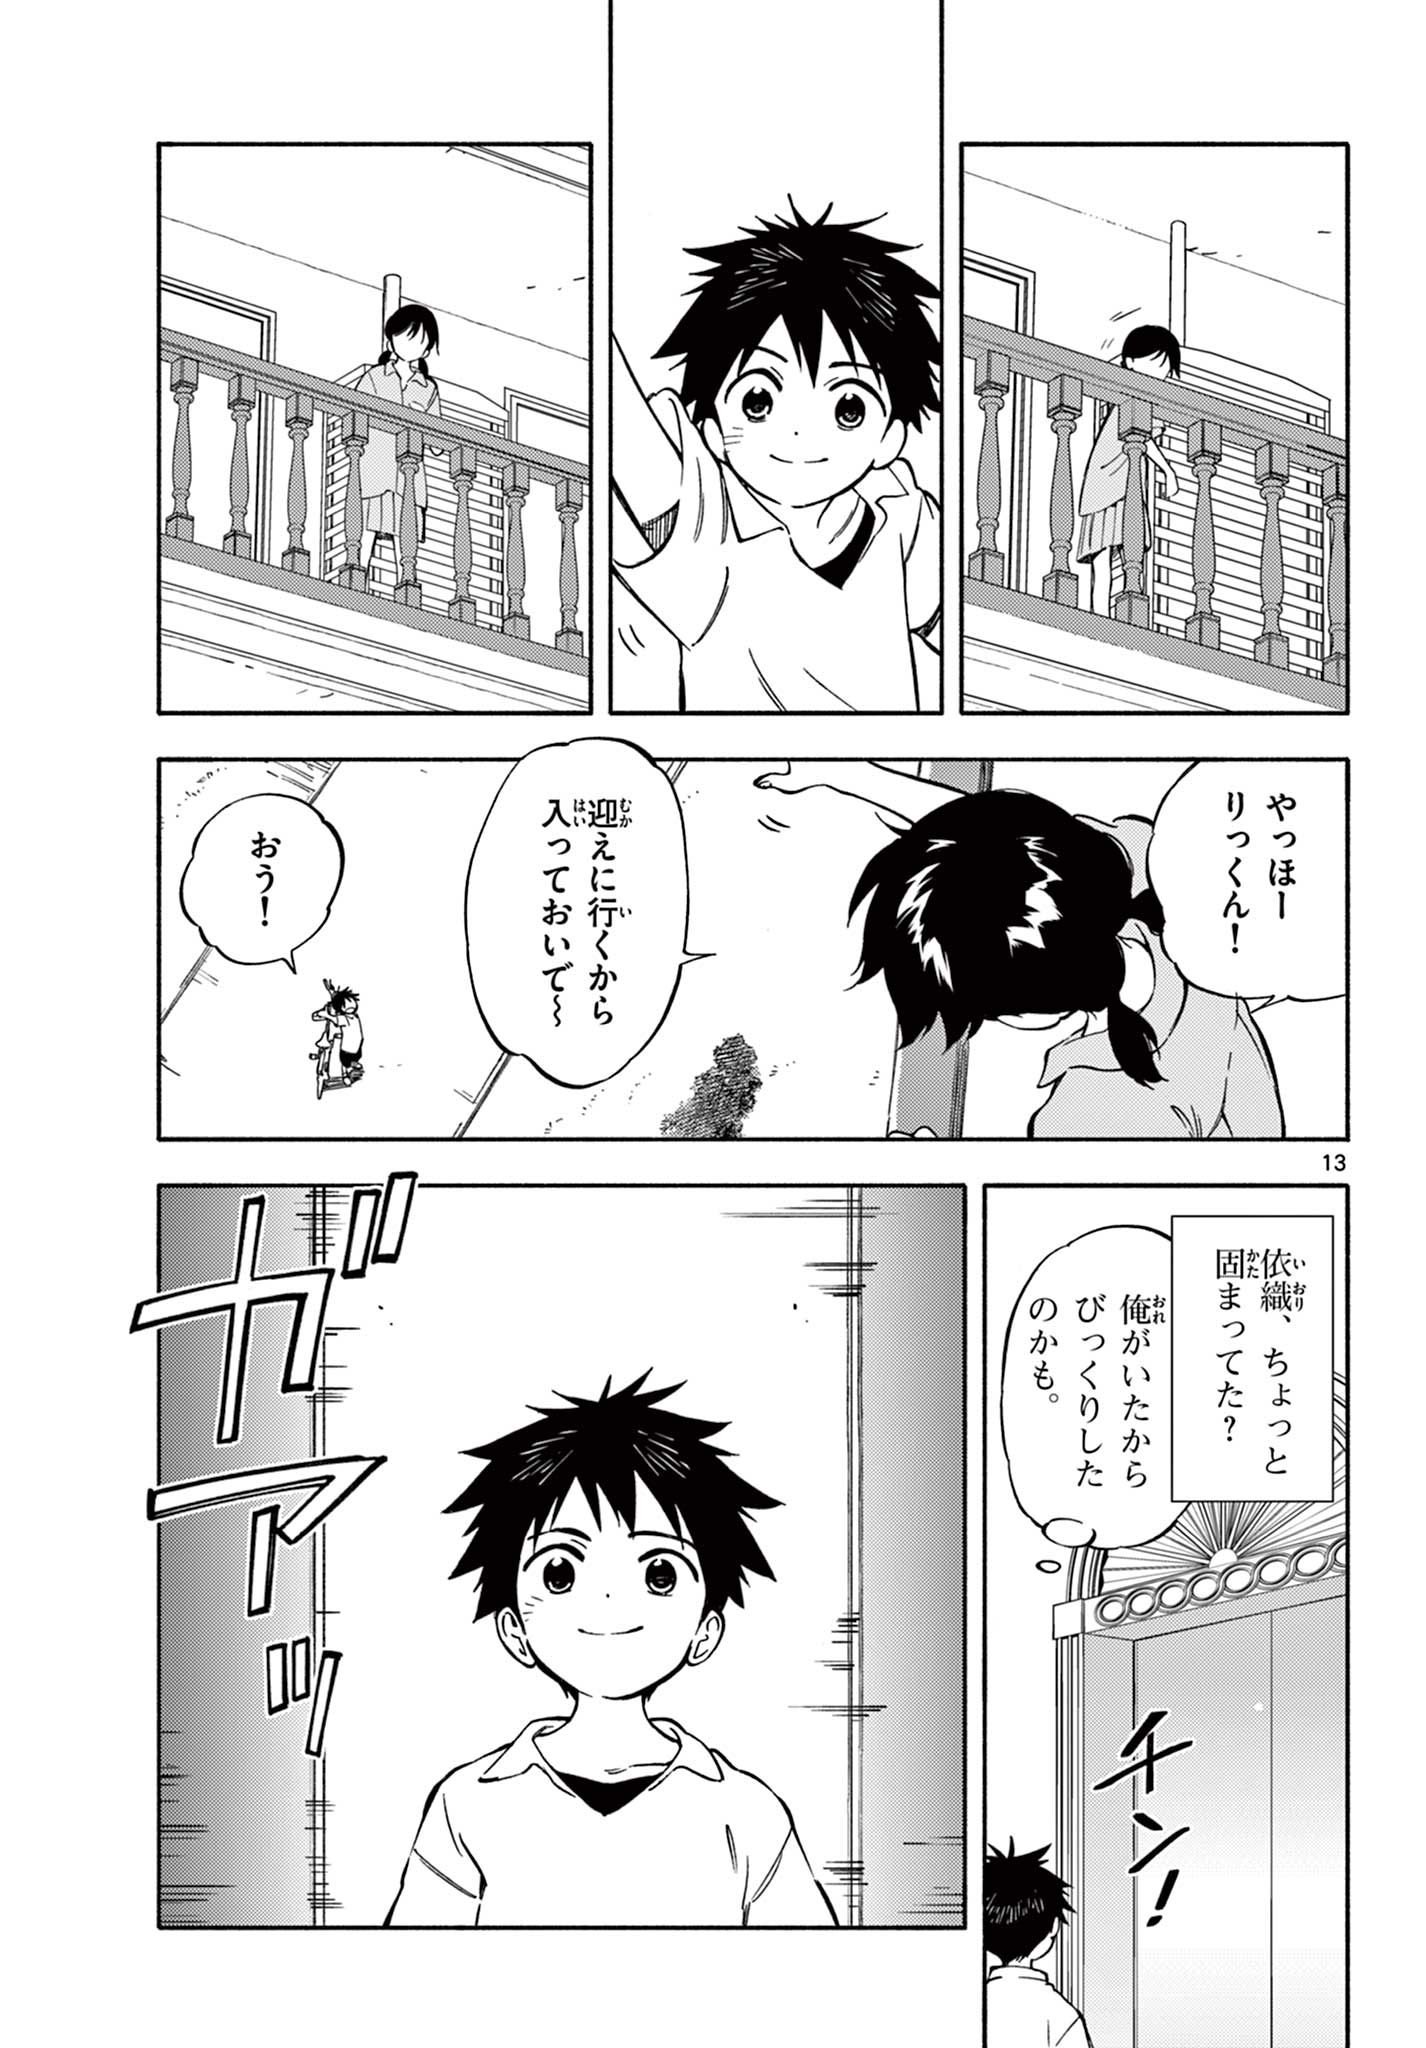 Nami no Shijima no Horizont - Chapter 12.1 - Page 13